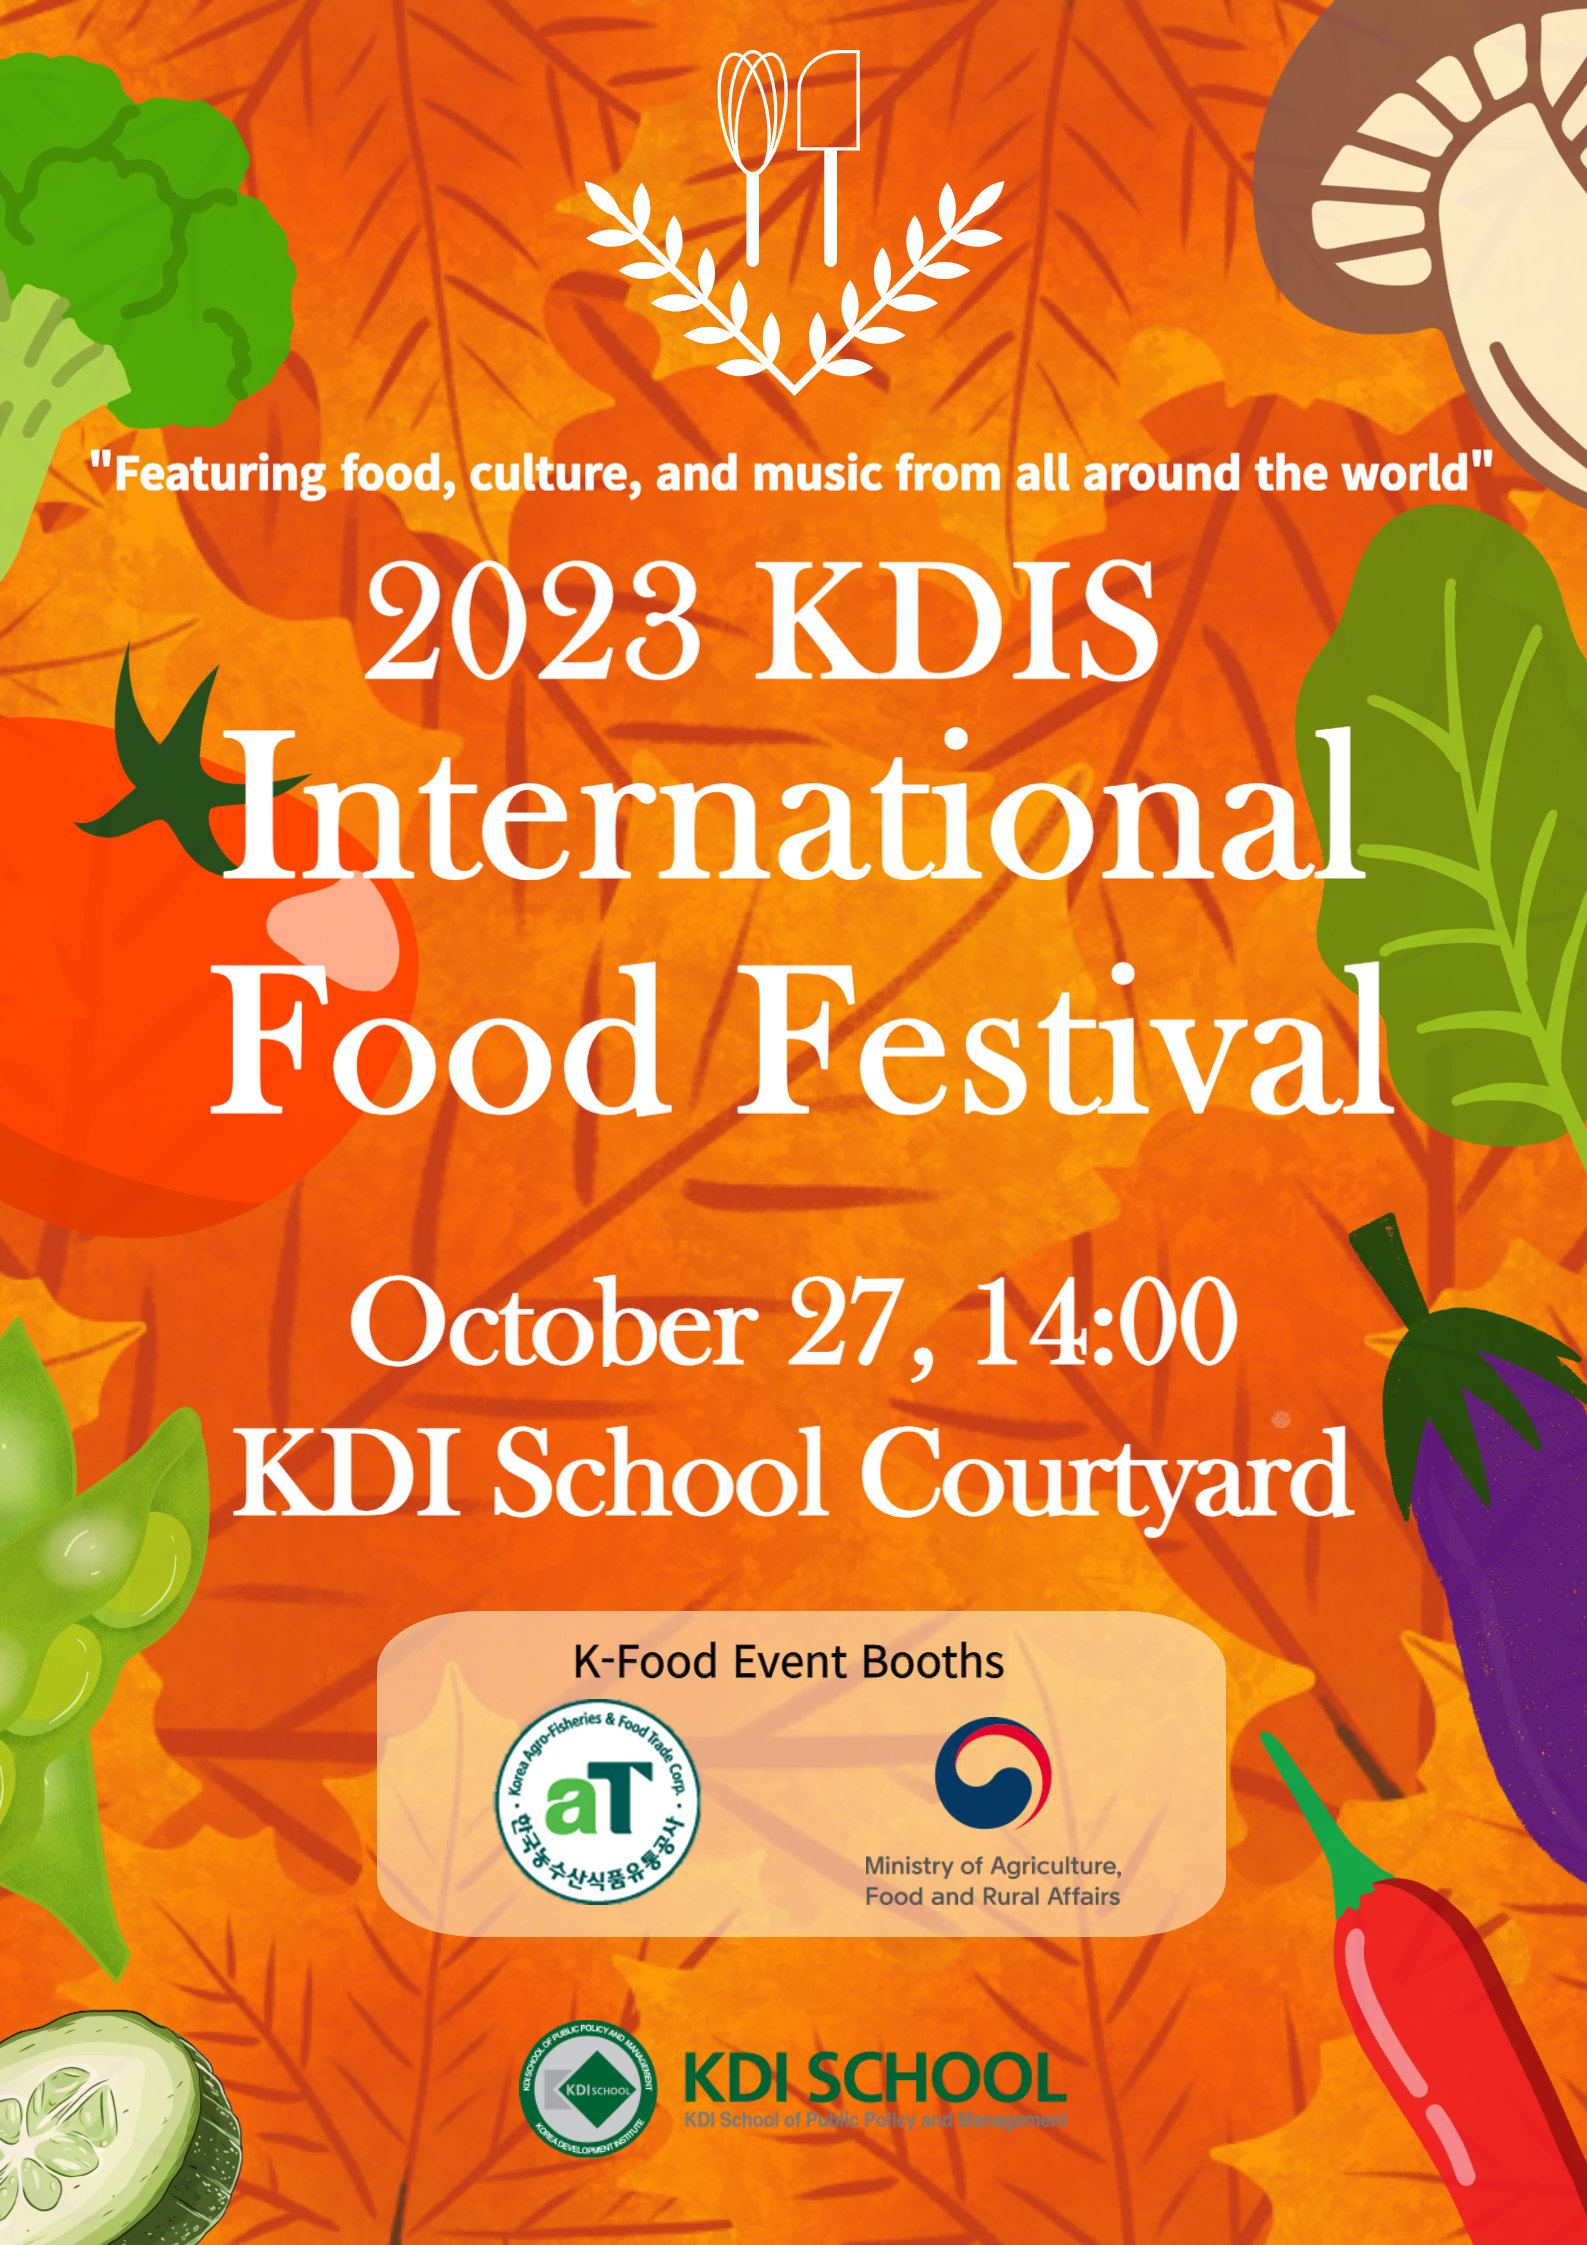 2023 KDIS International Food Festival (Oct. 27 14:00)